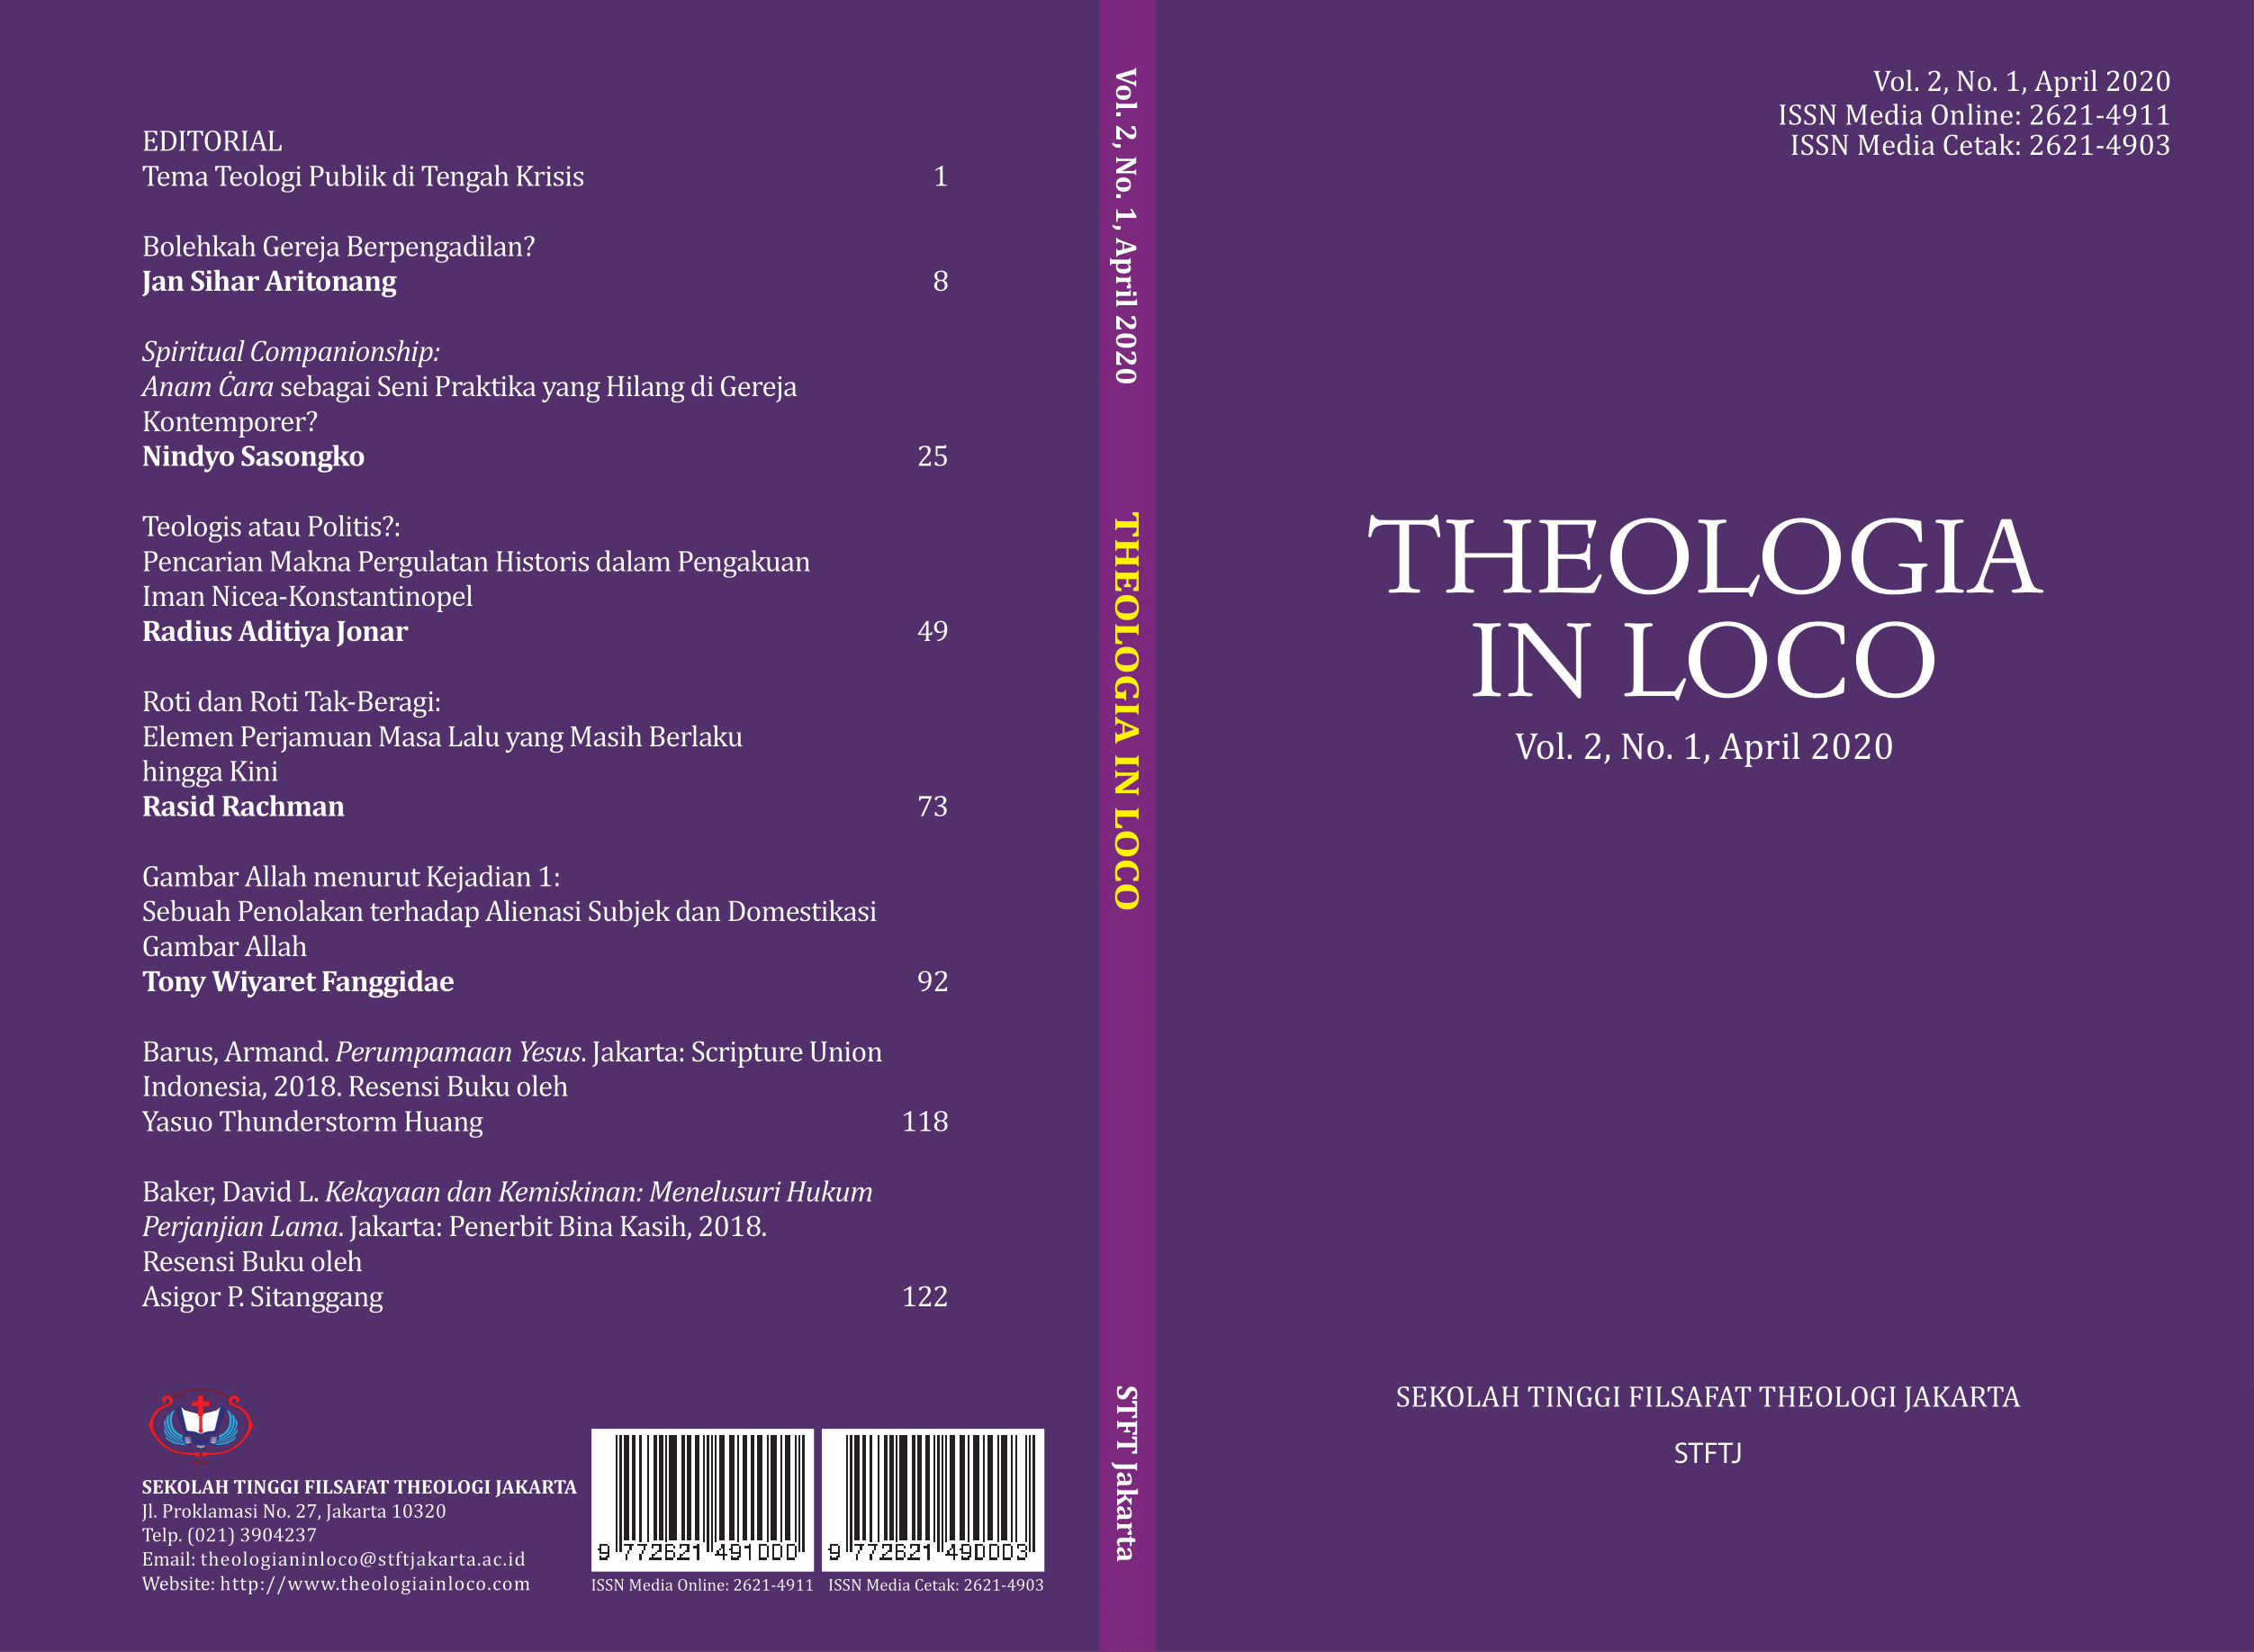 Theologia in Loco Vol. 2 No. 1 April 2020